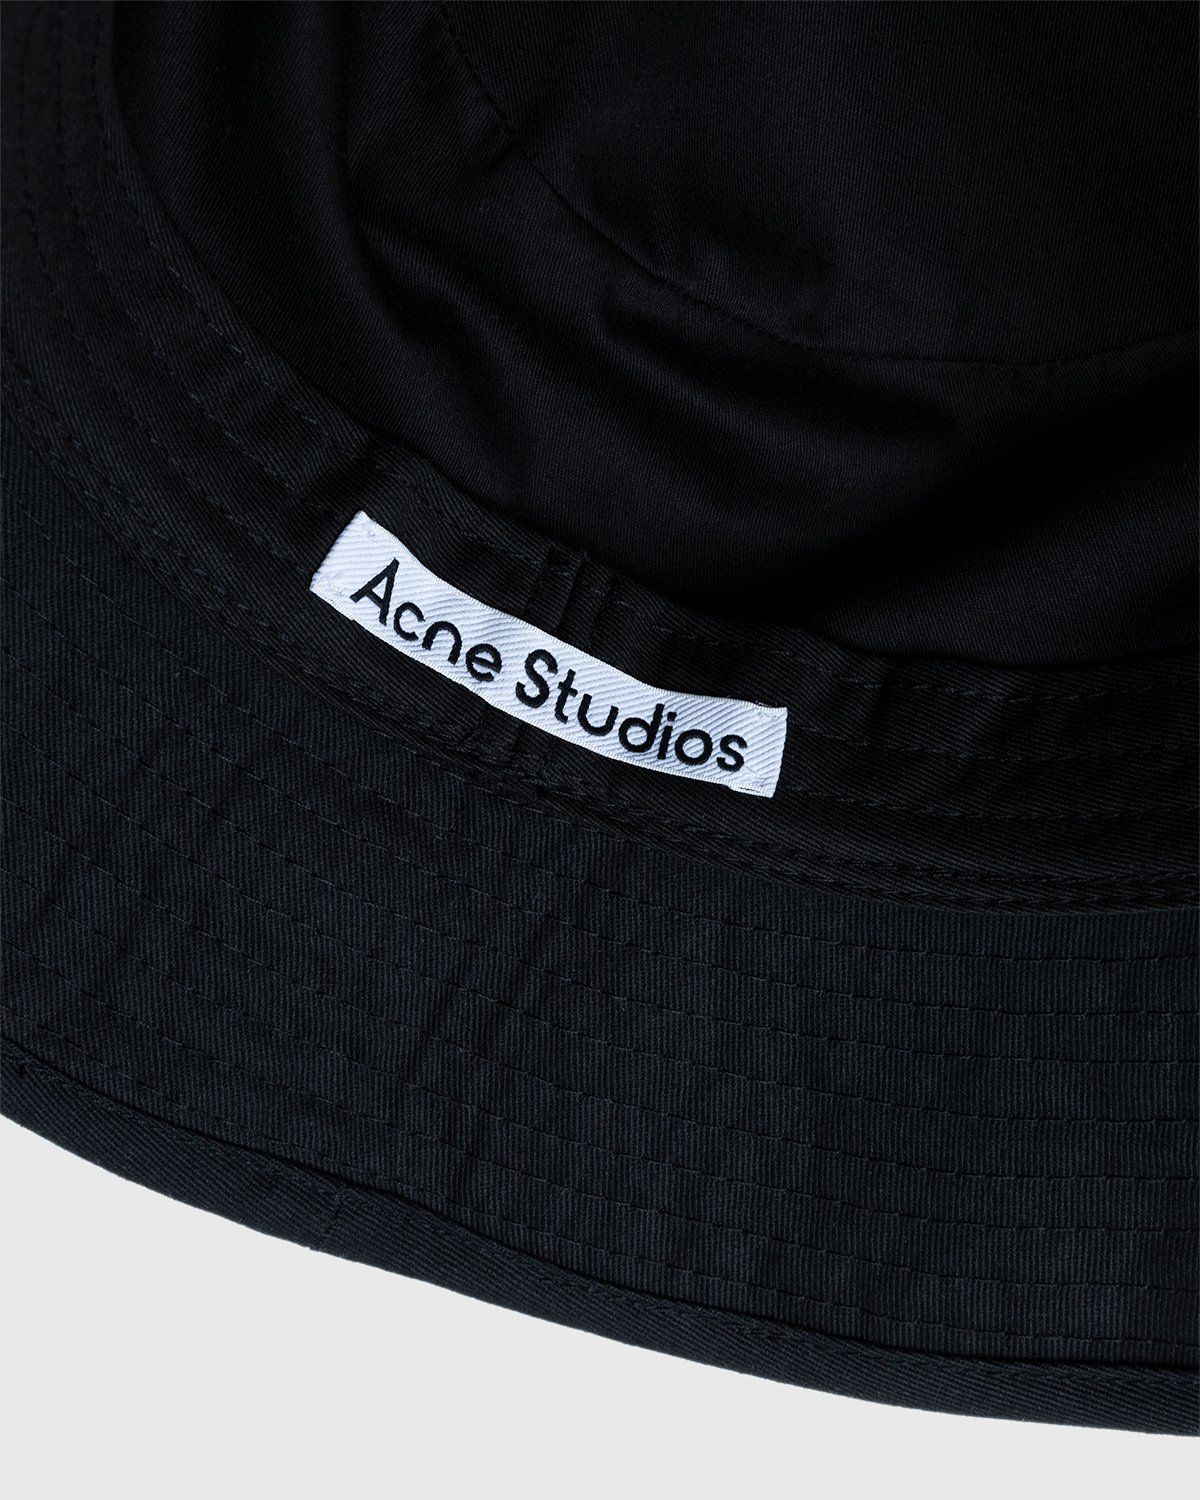 Acne Studios – Twill Bucket Hat Black - Hats - Black - Image 4